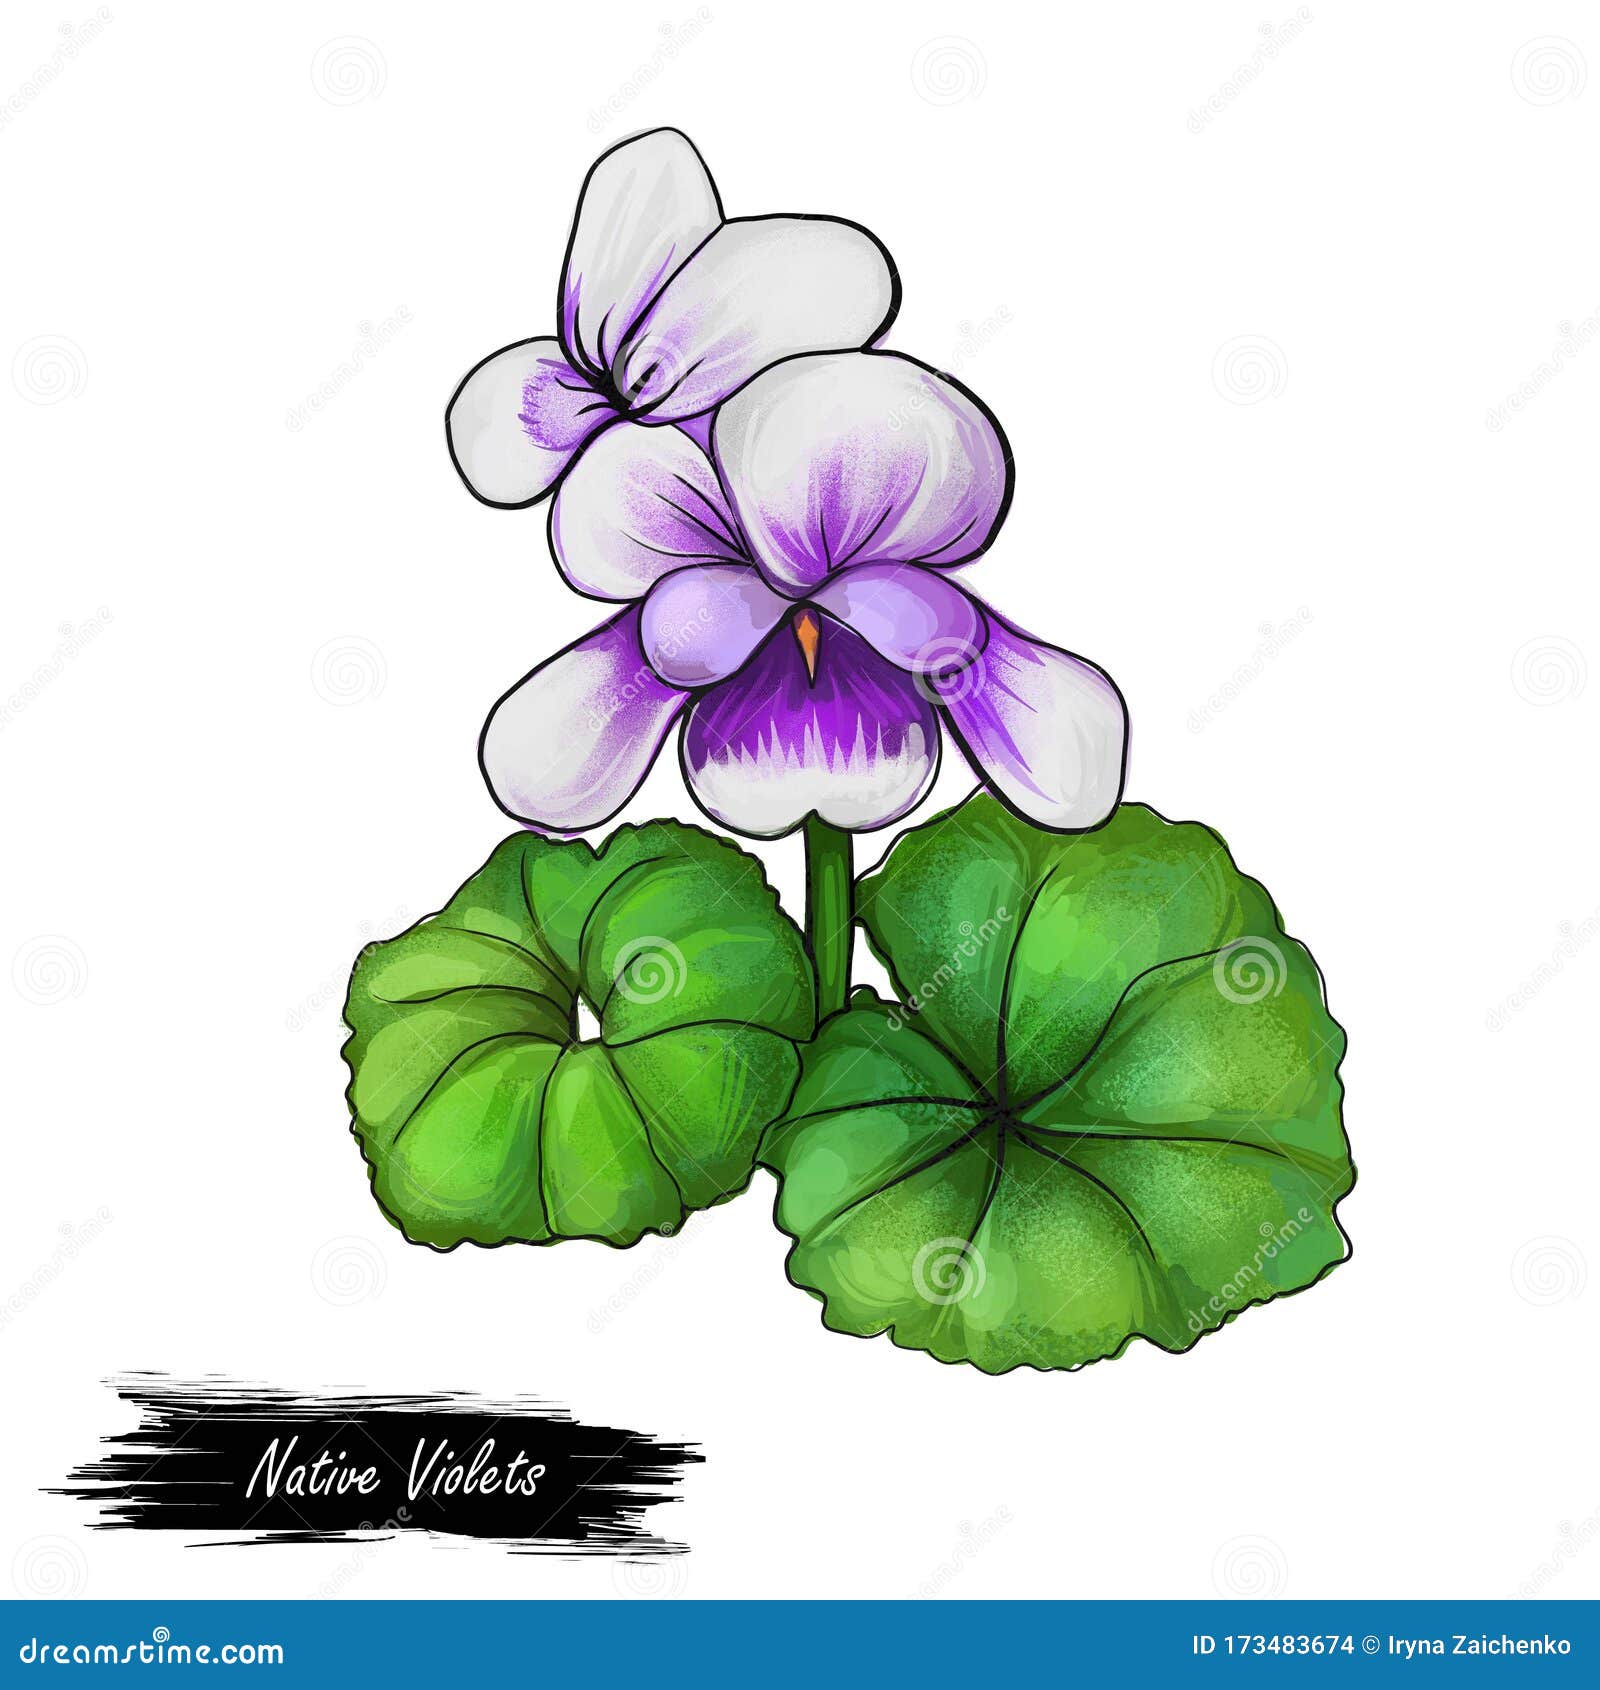 native violets flowers  digita art .